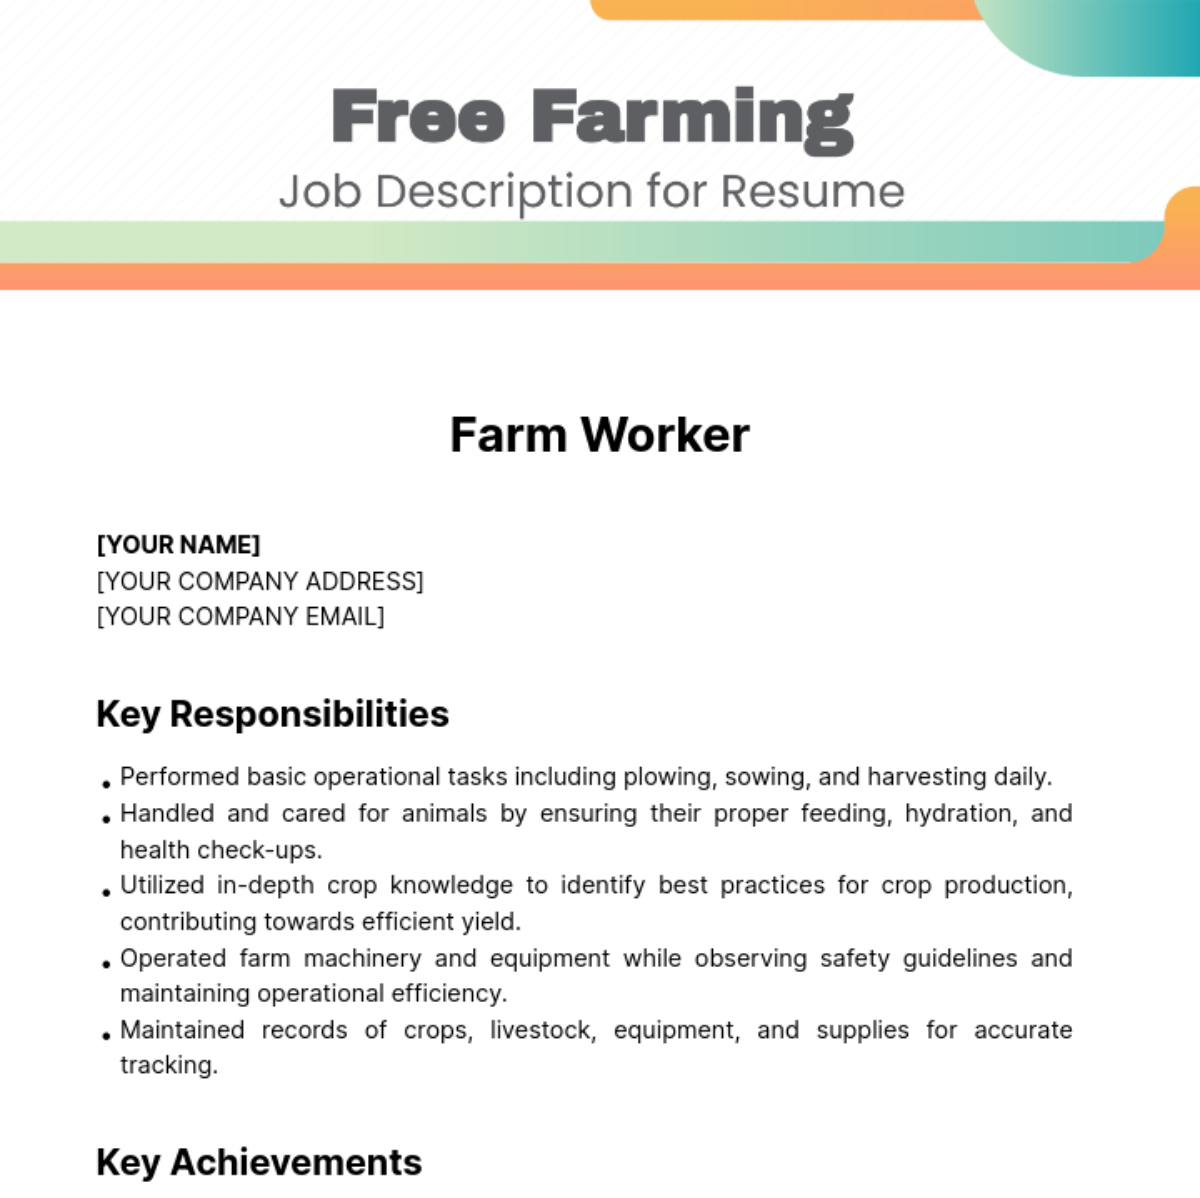 Farming Job Description for Resume Template